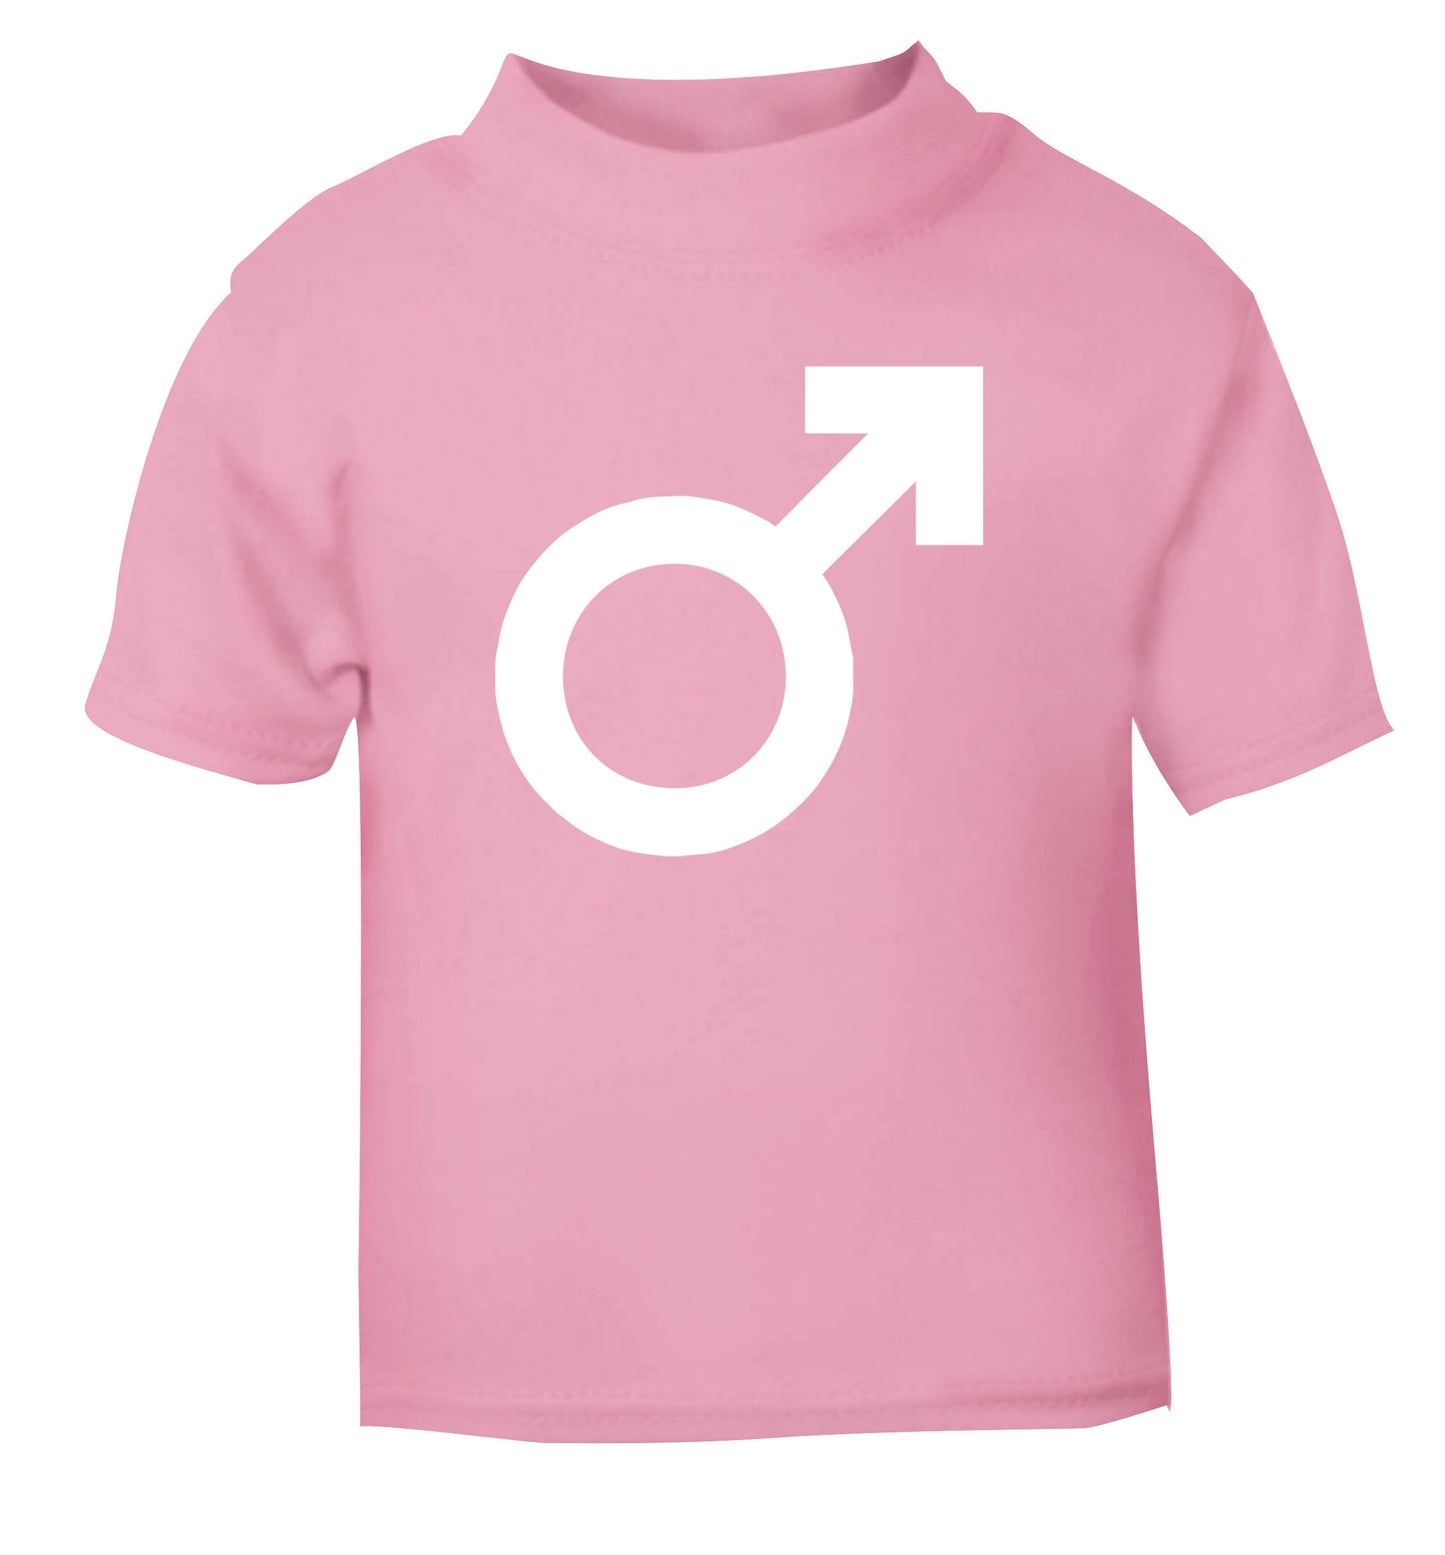 Male symbol large light pink Baby Toddler Tshirt 2 Years